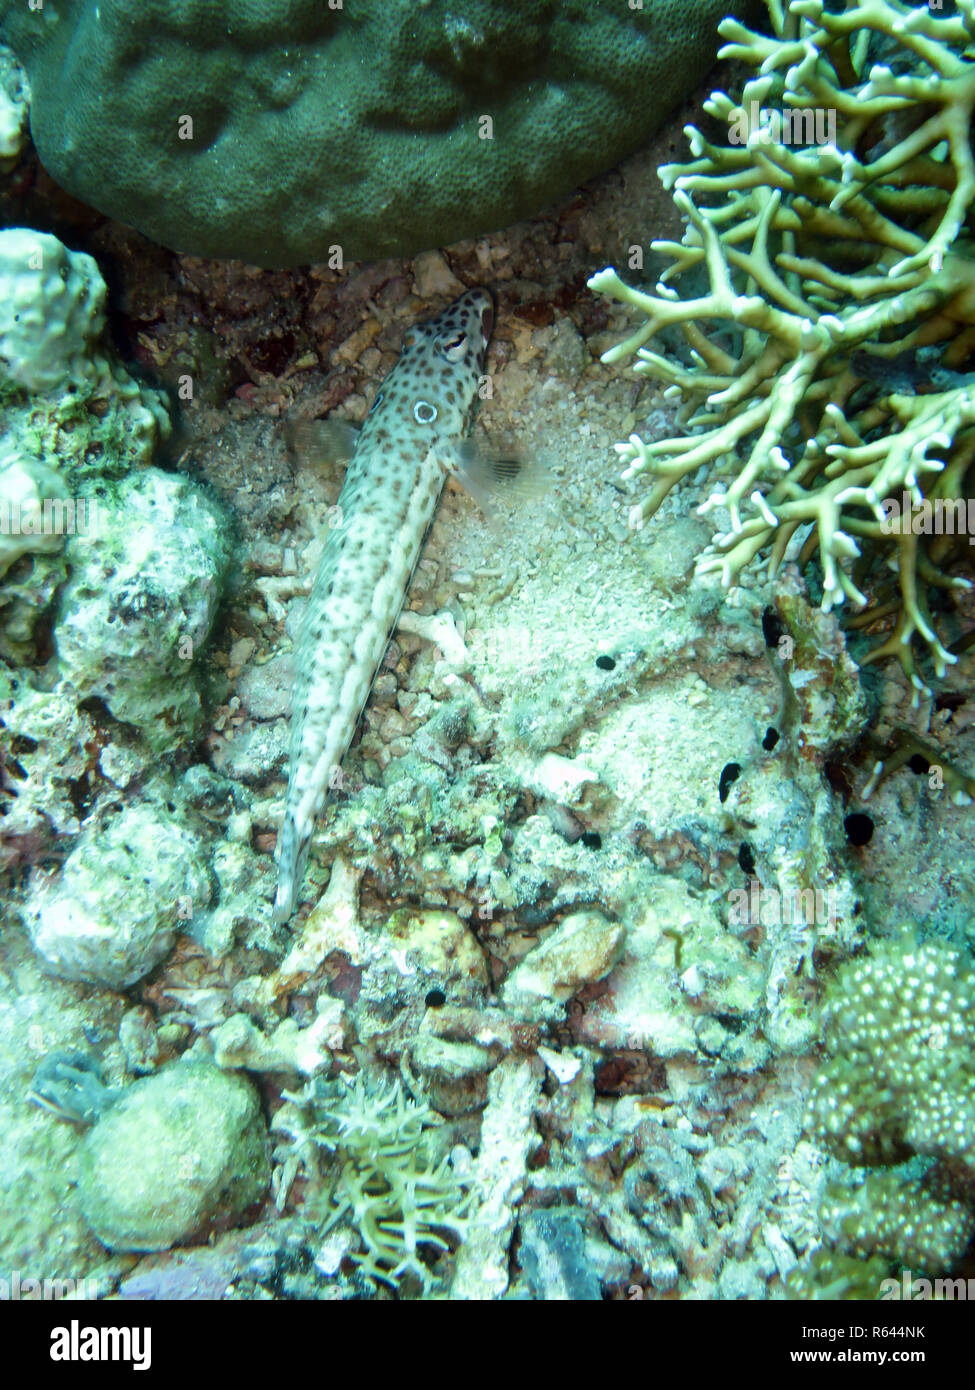 Ear-spotted sabbia bass (parapercis clathrata) Foto Stock